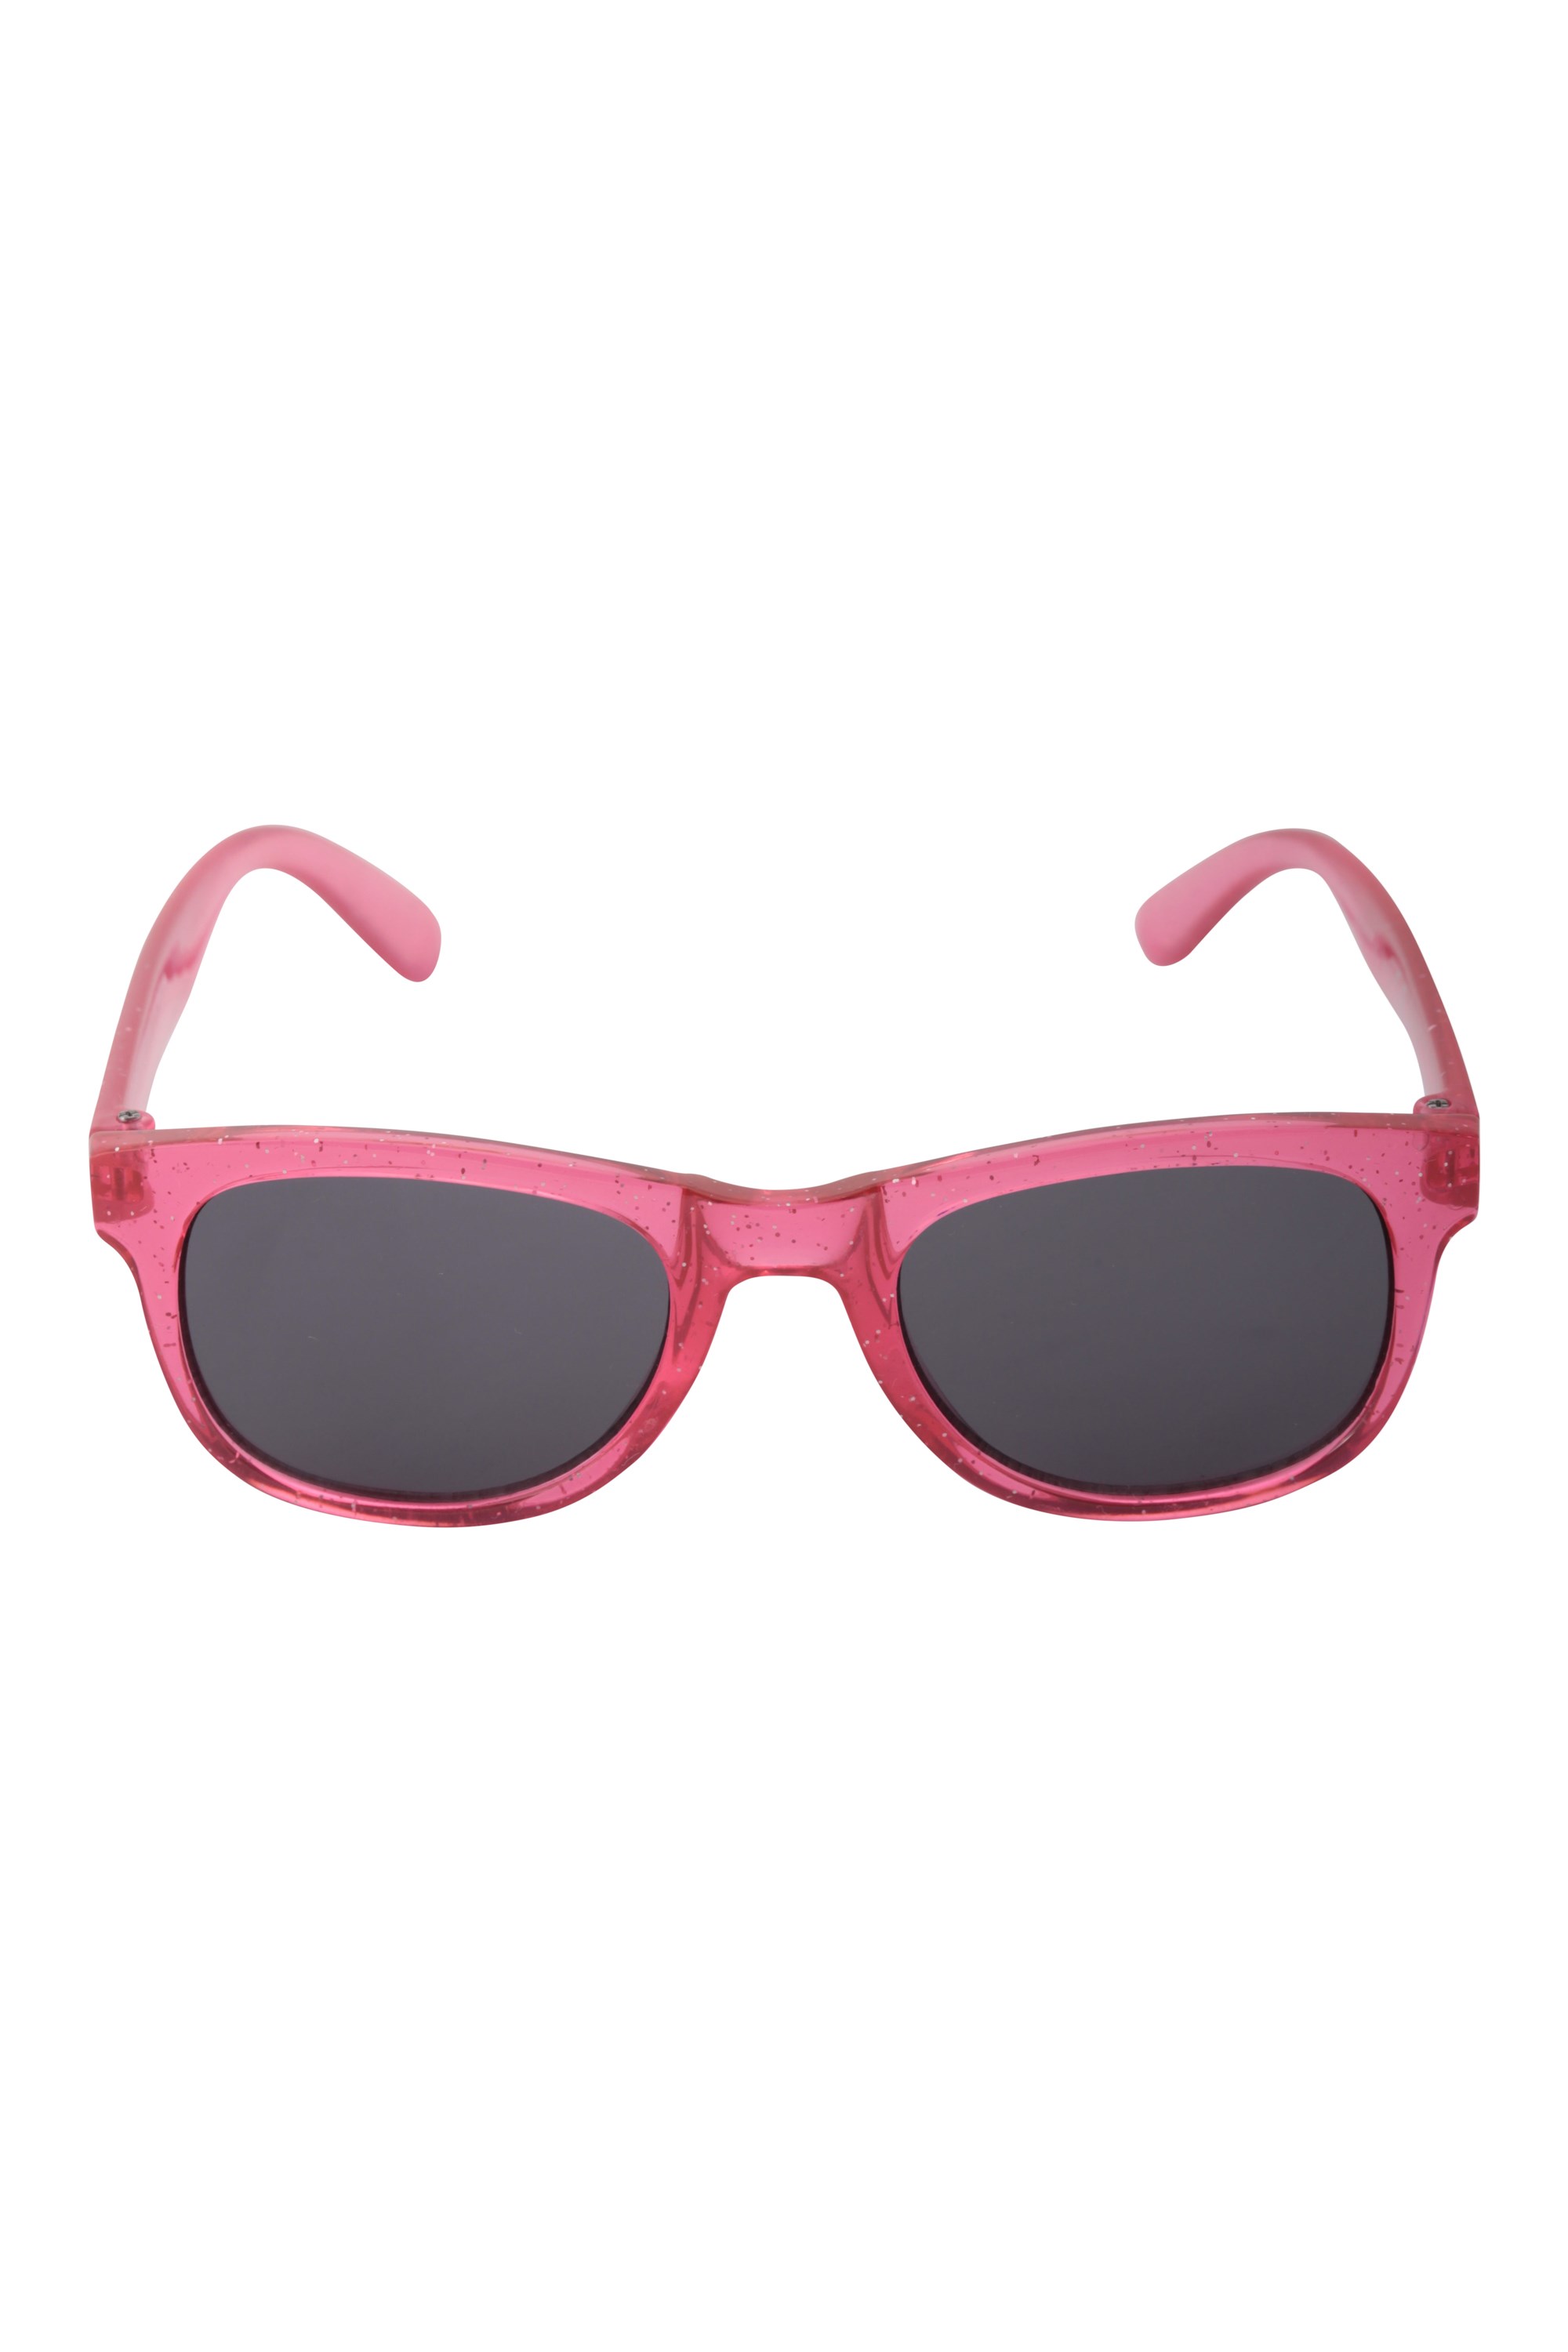 Mountain Warehouse Tahiti Kids Sunglasses Pink